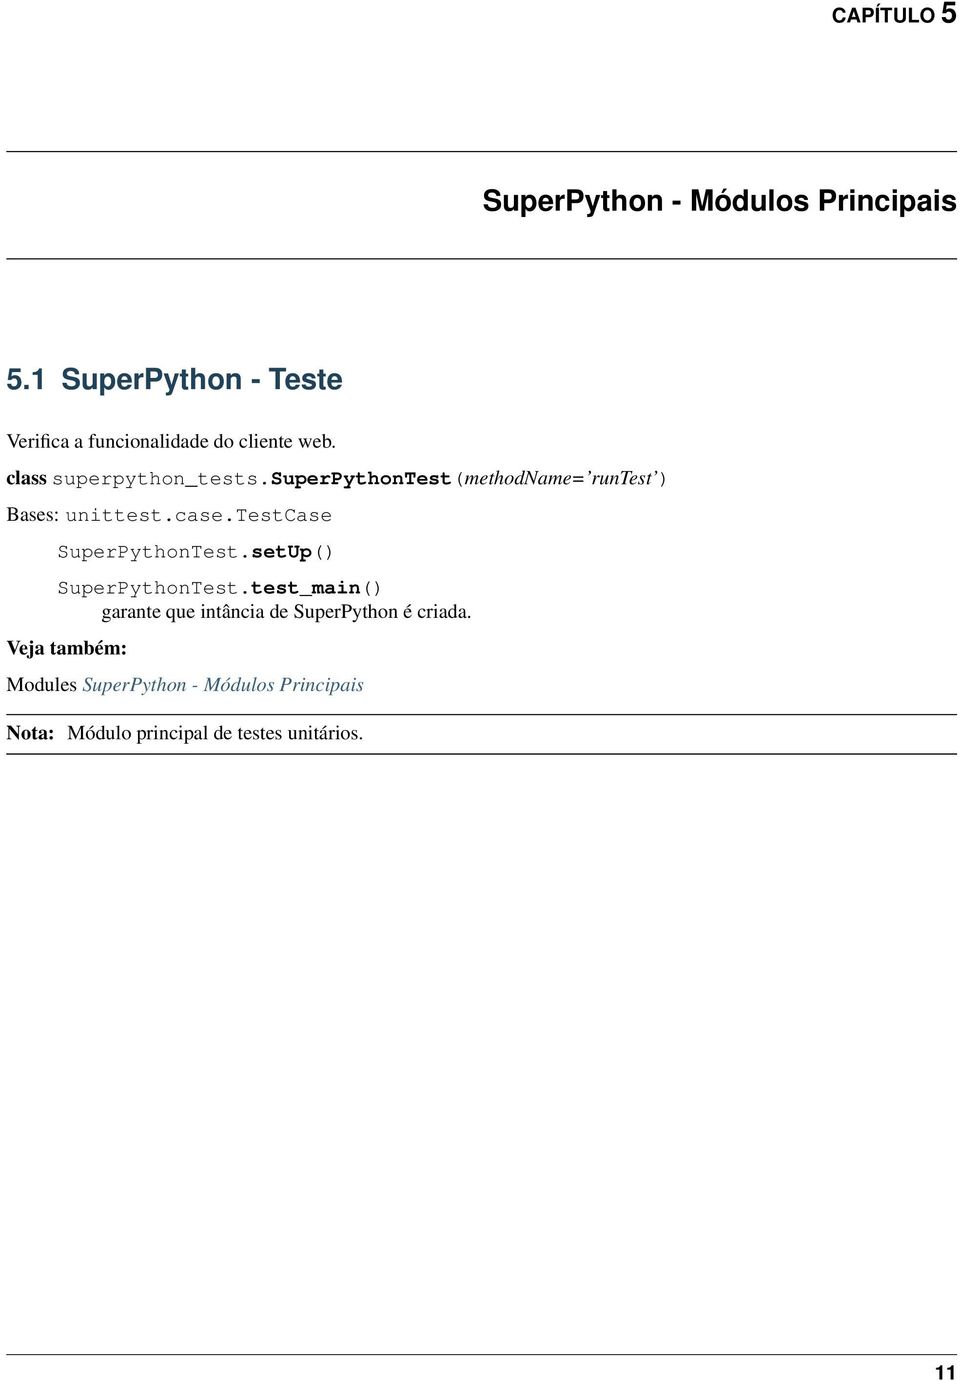 superpythontest(methodname= runtest ) Bases: unittest.case.testcase SuperPythonTest.